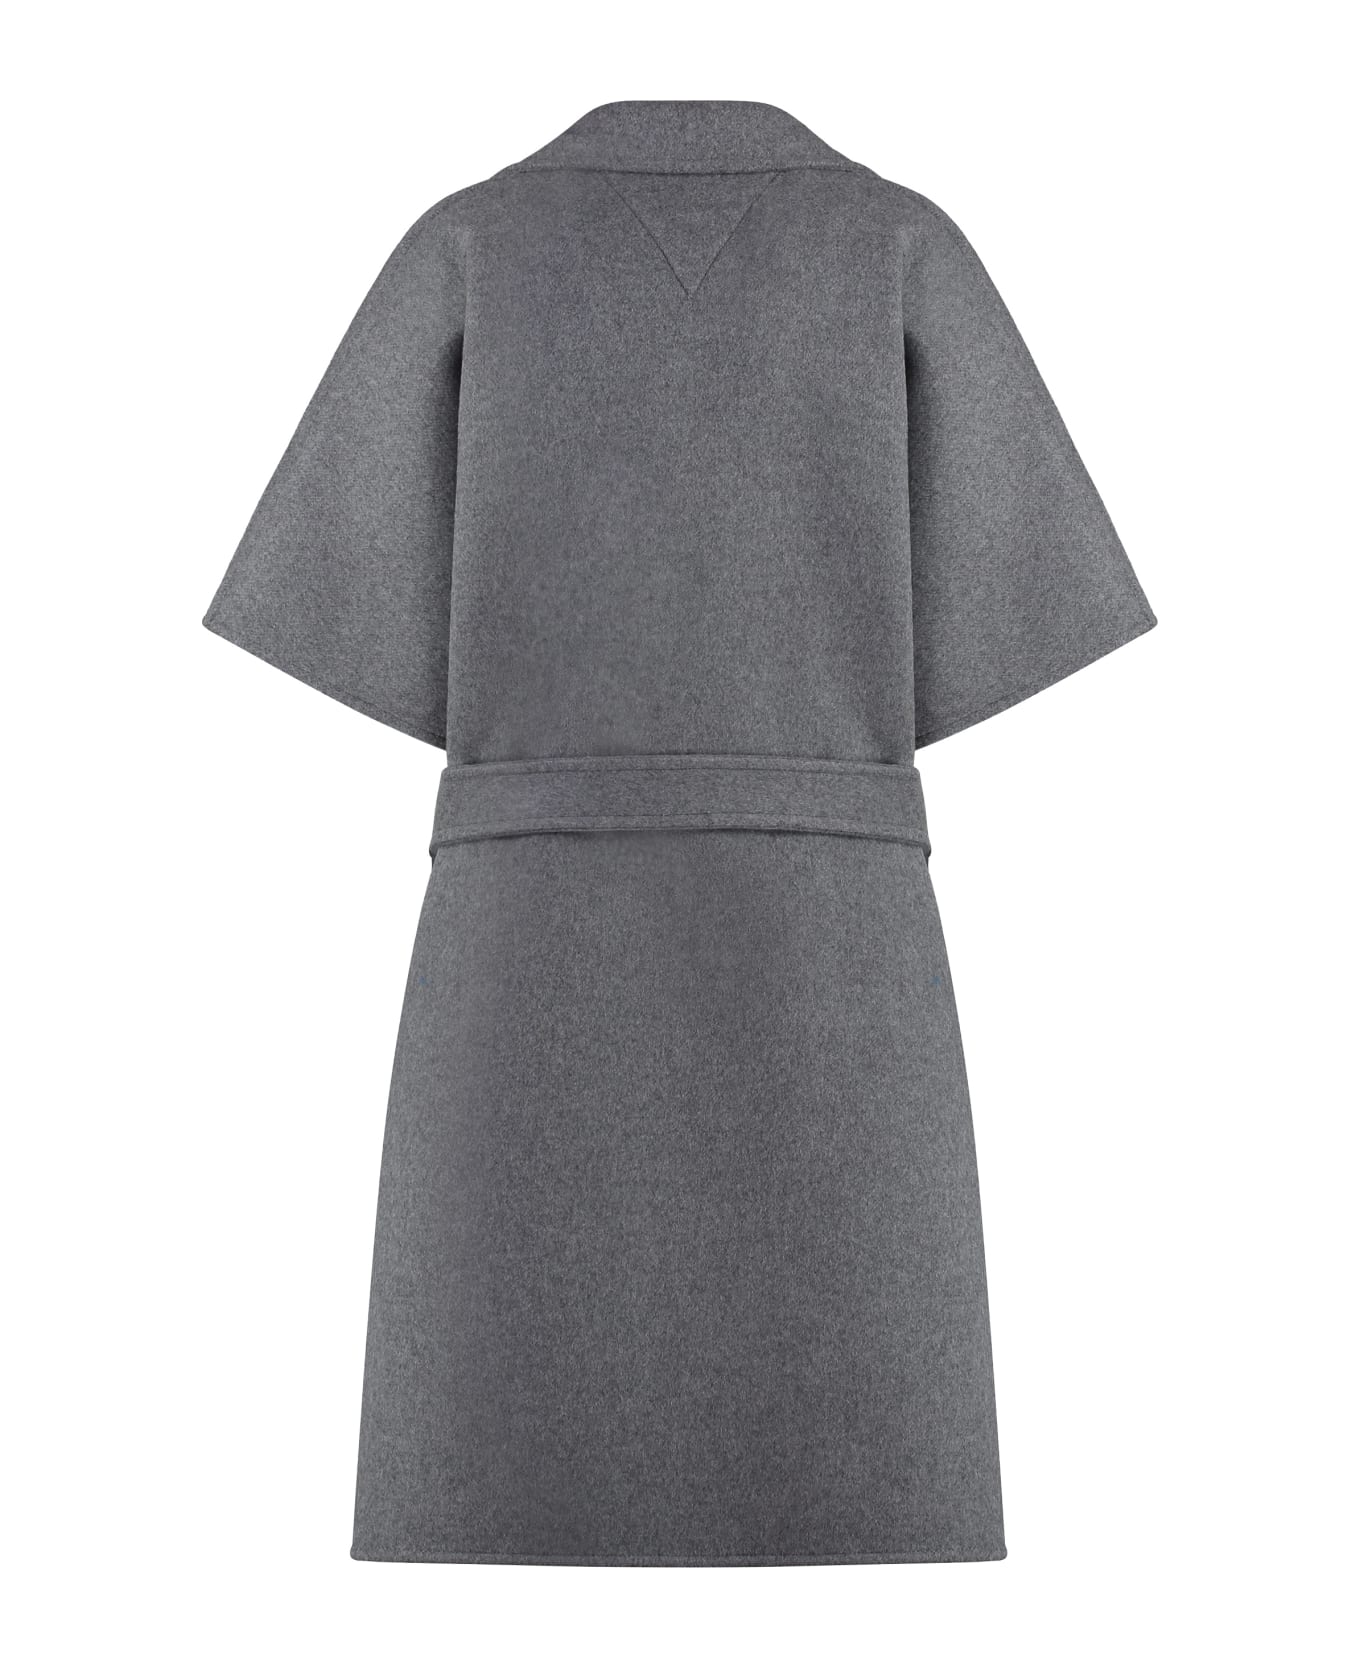 Bottega Veneta Wool And Cashmere Coat - grey コート